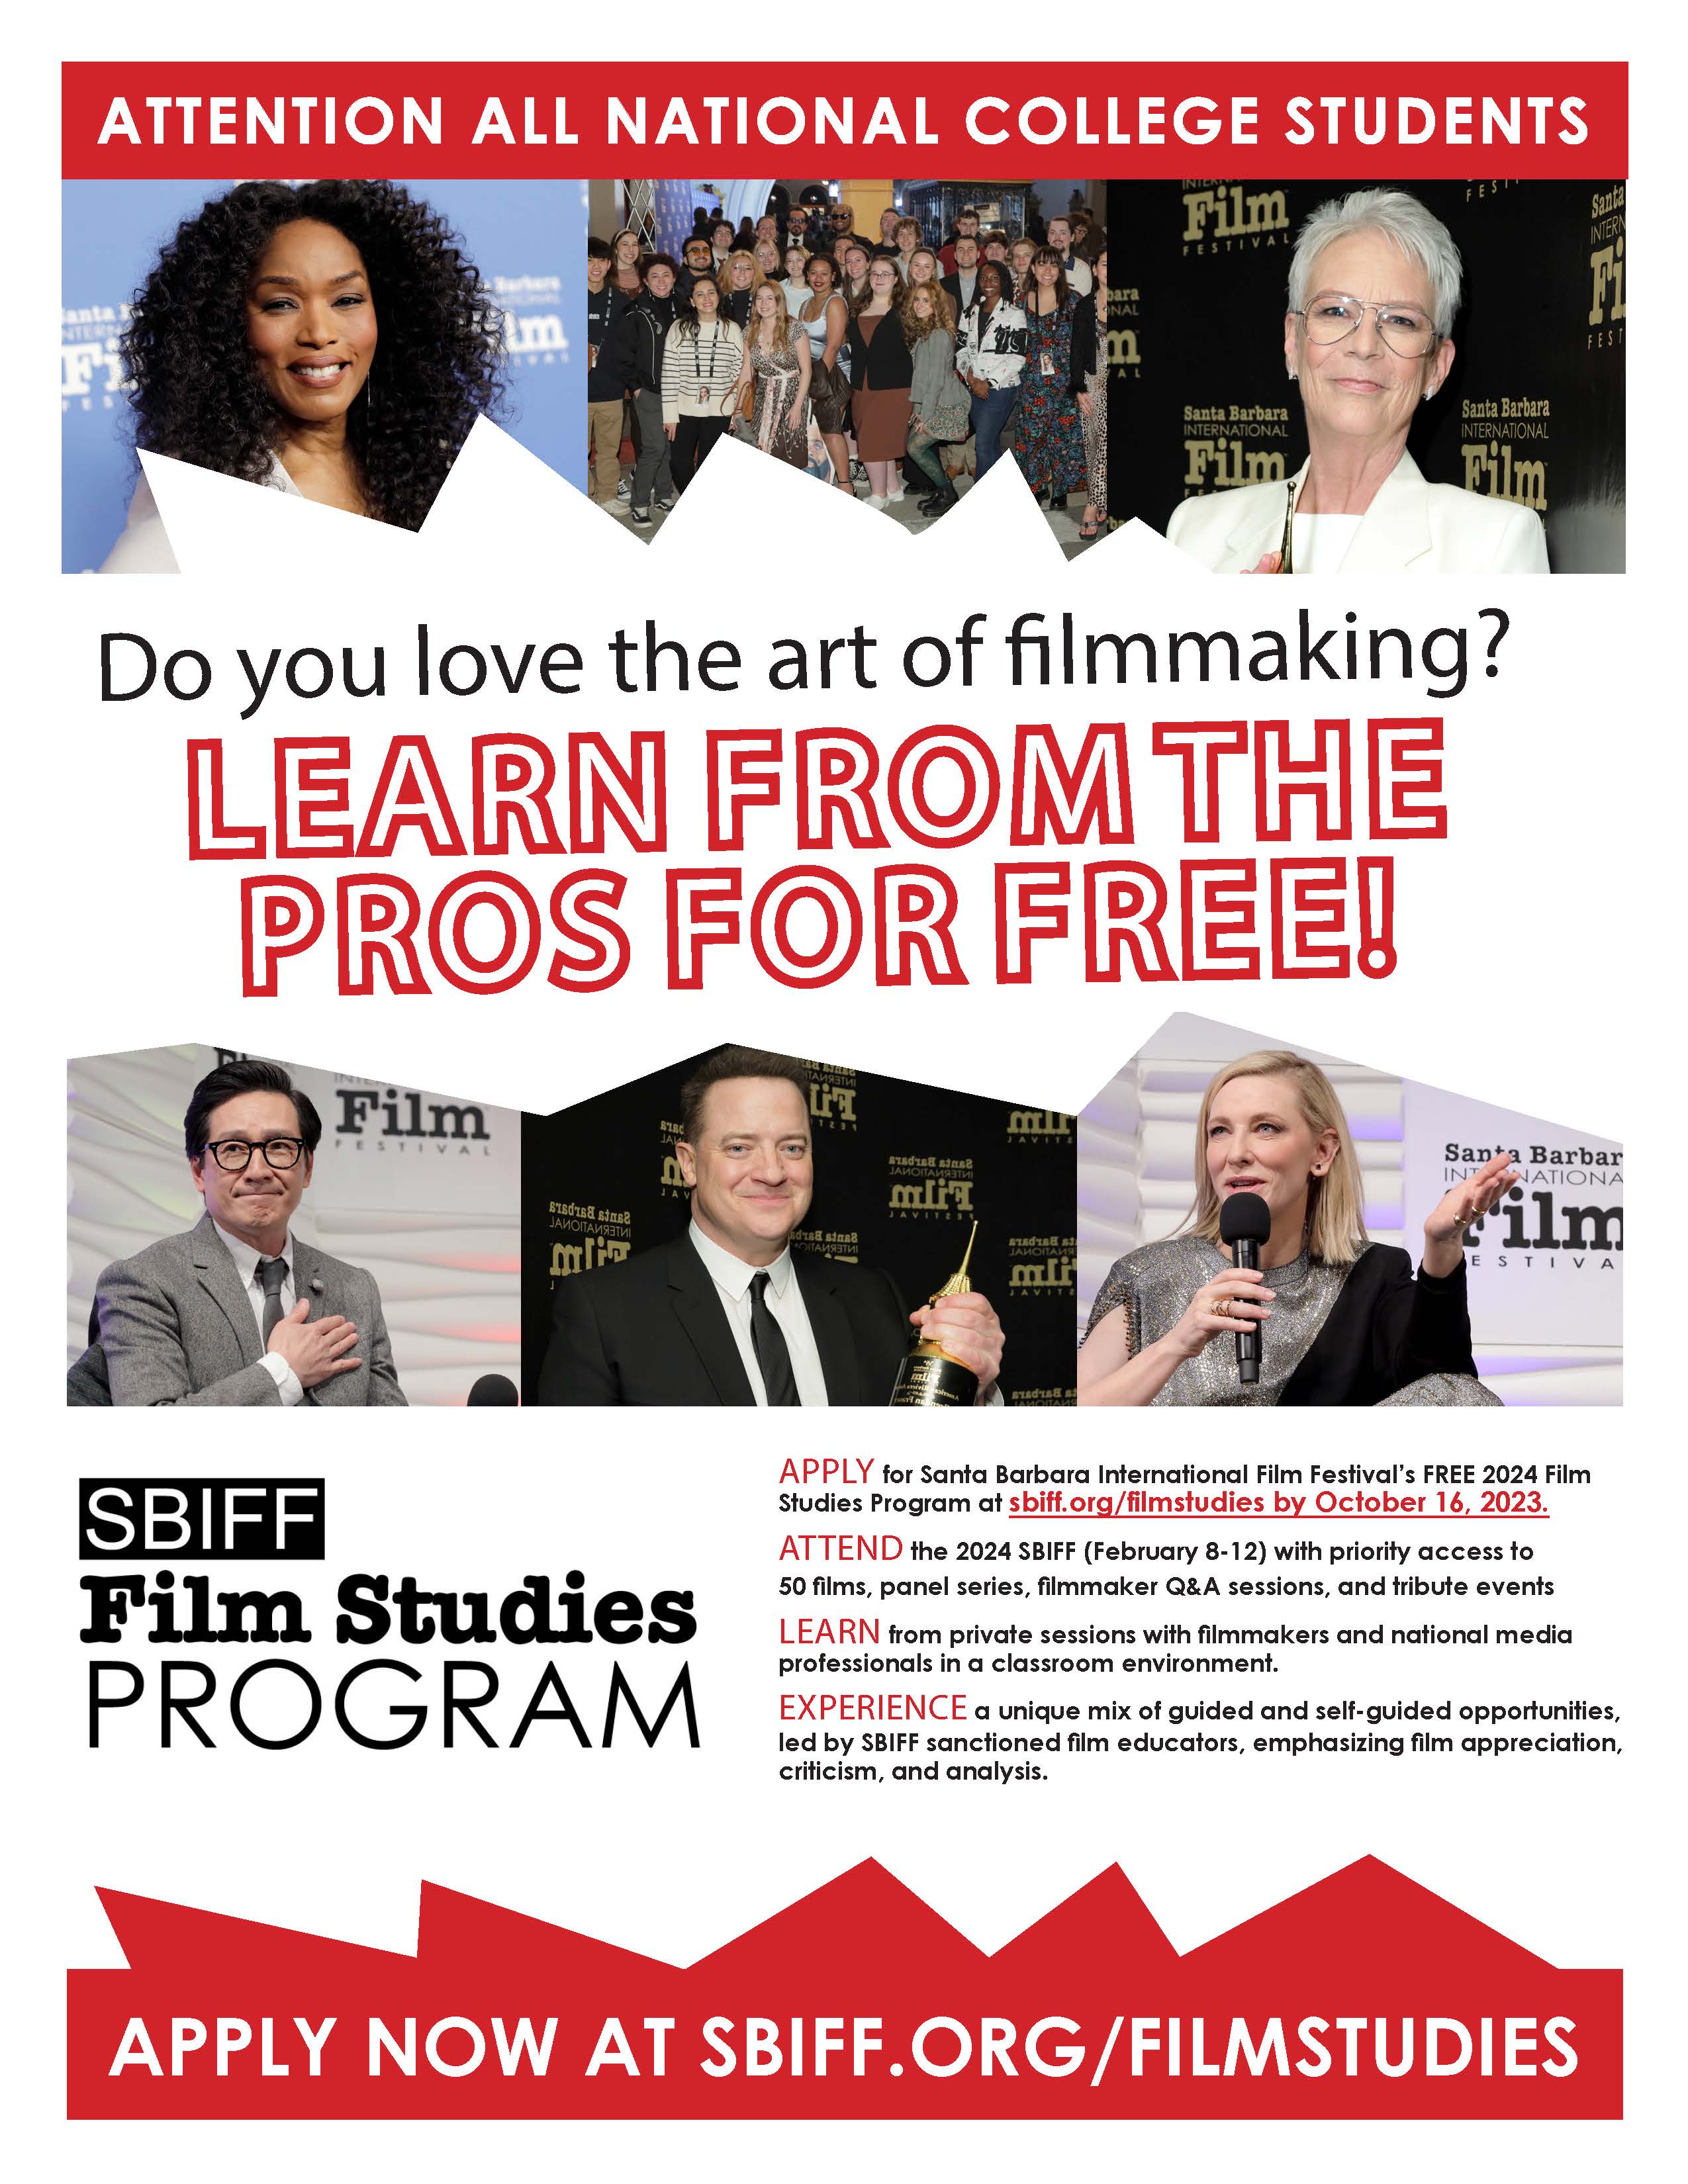 SBIFF Film Studies Program Flyer